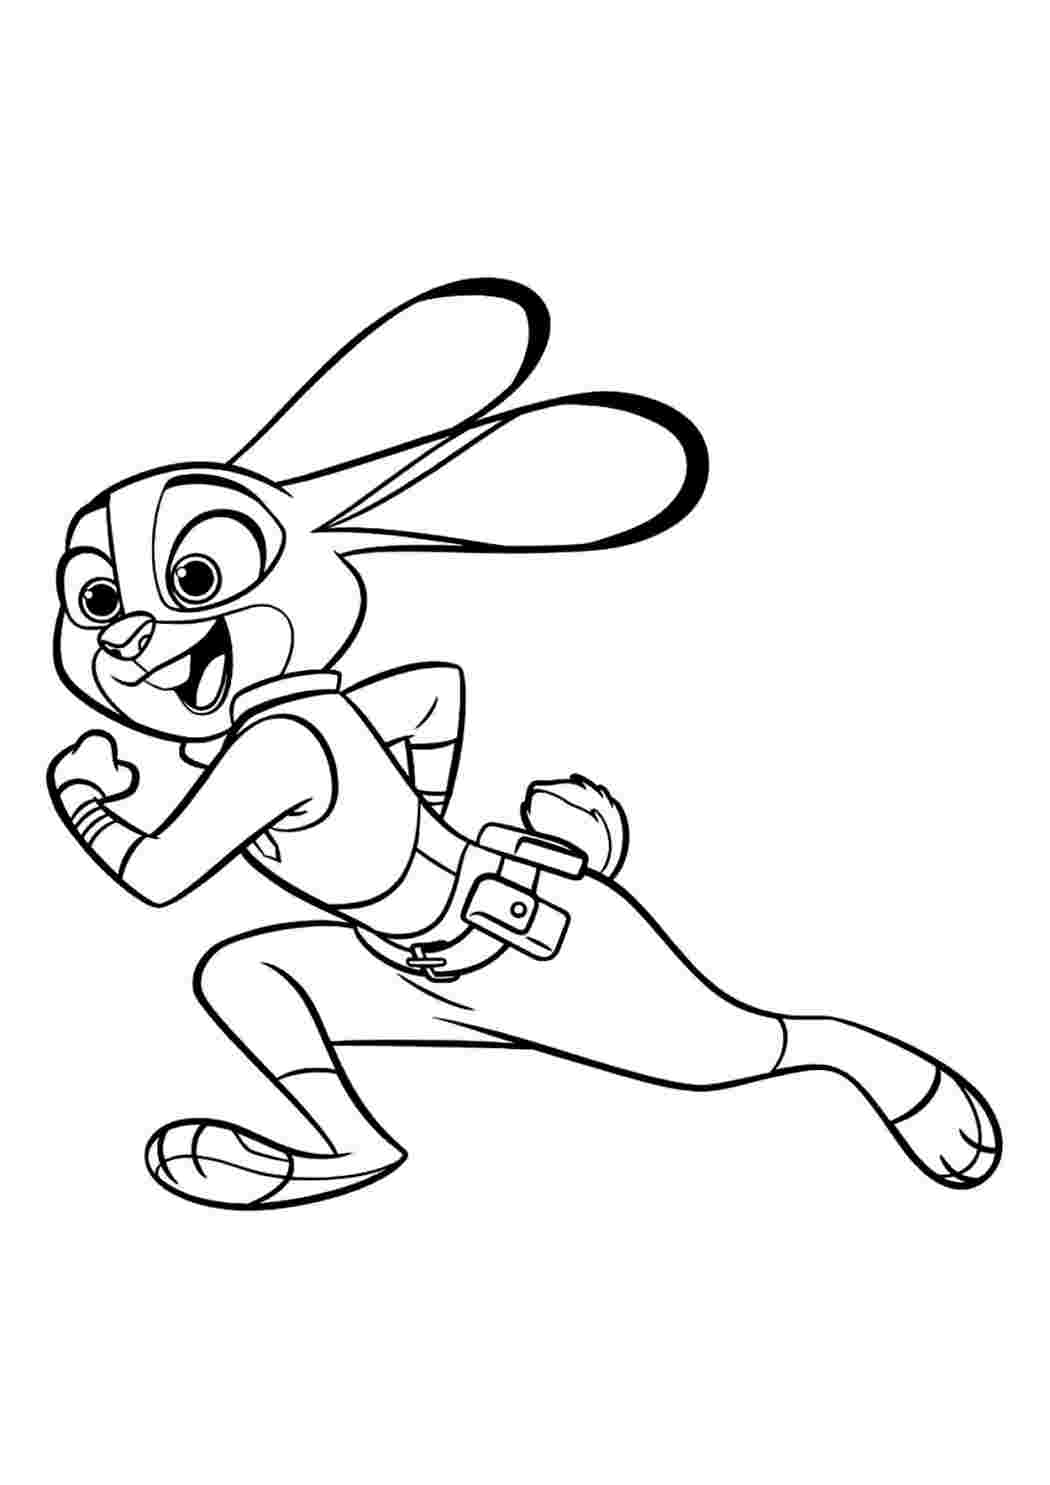 Рисунок карандашом заяц спортсмен